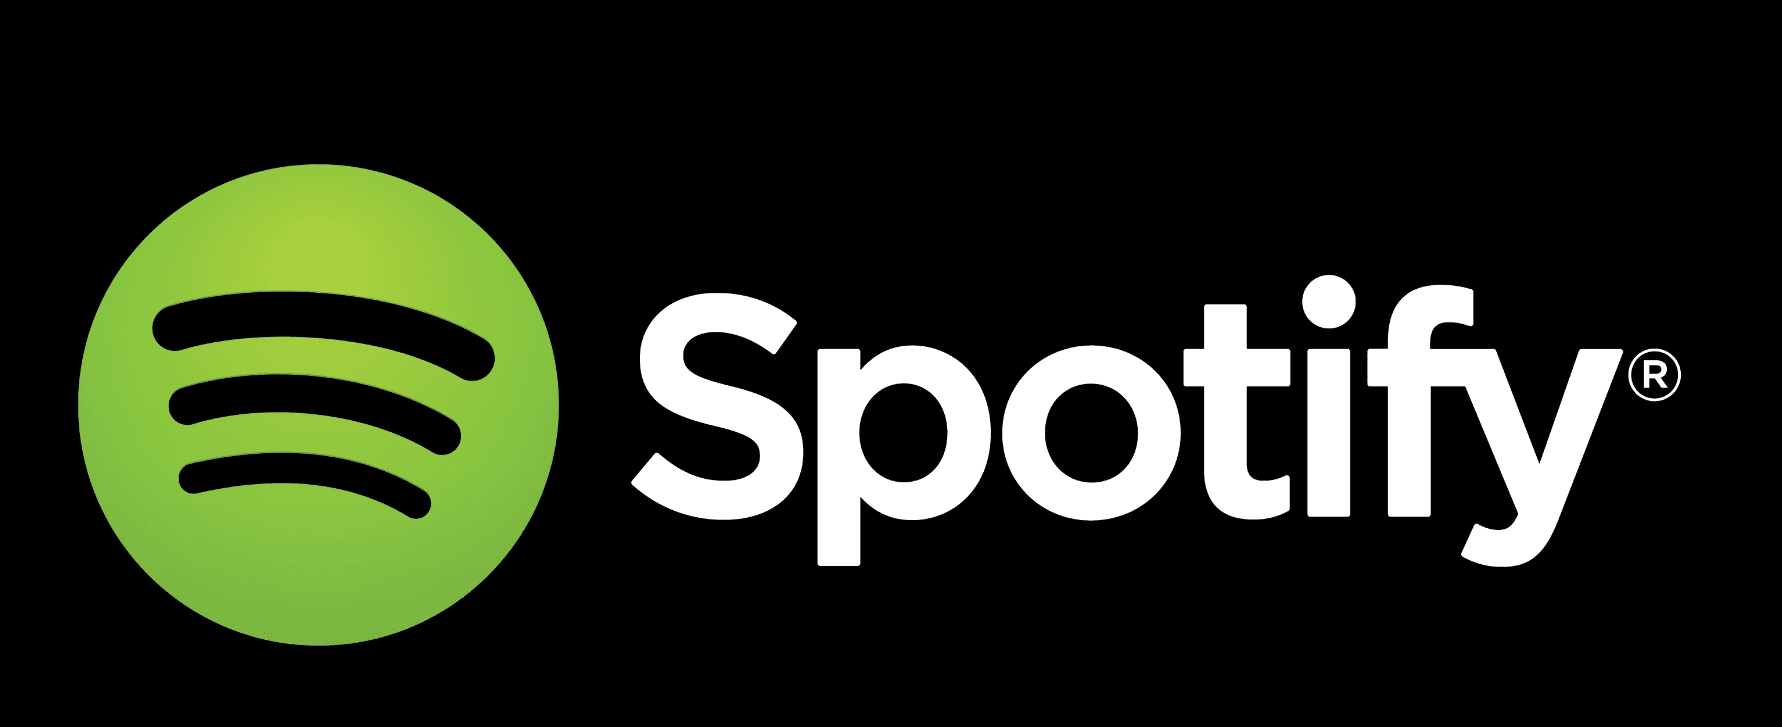 Spotify has 80 million tracks